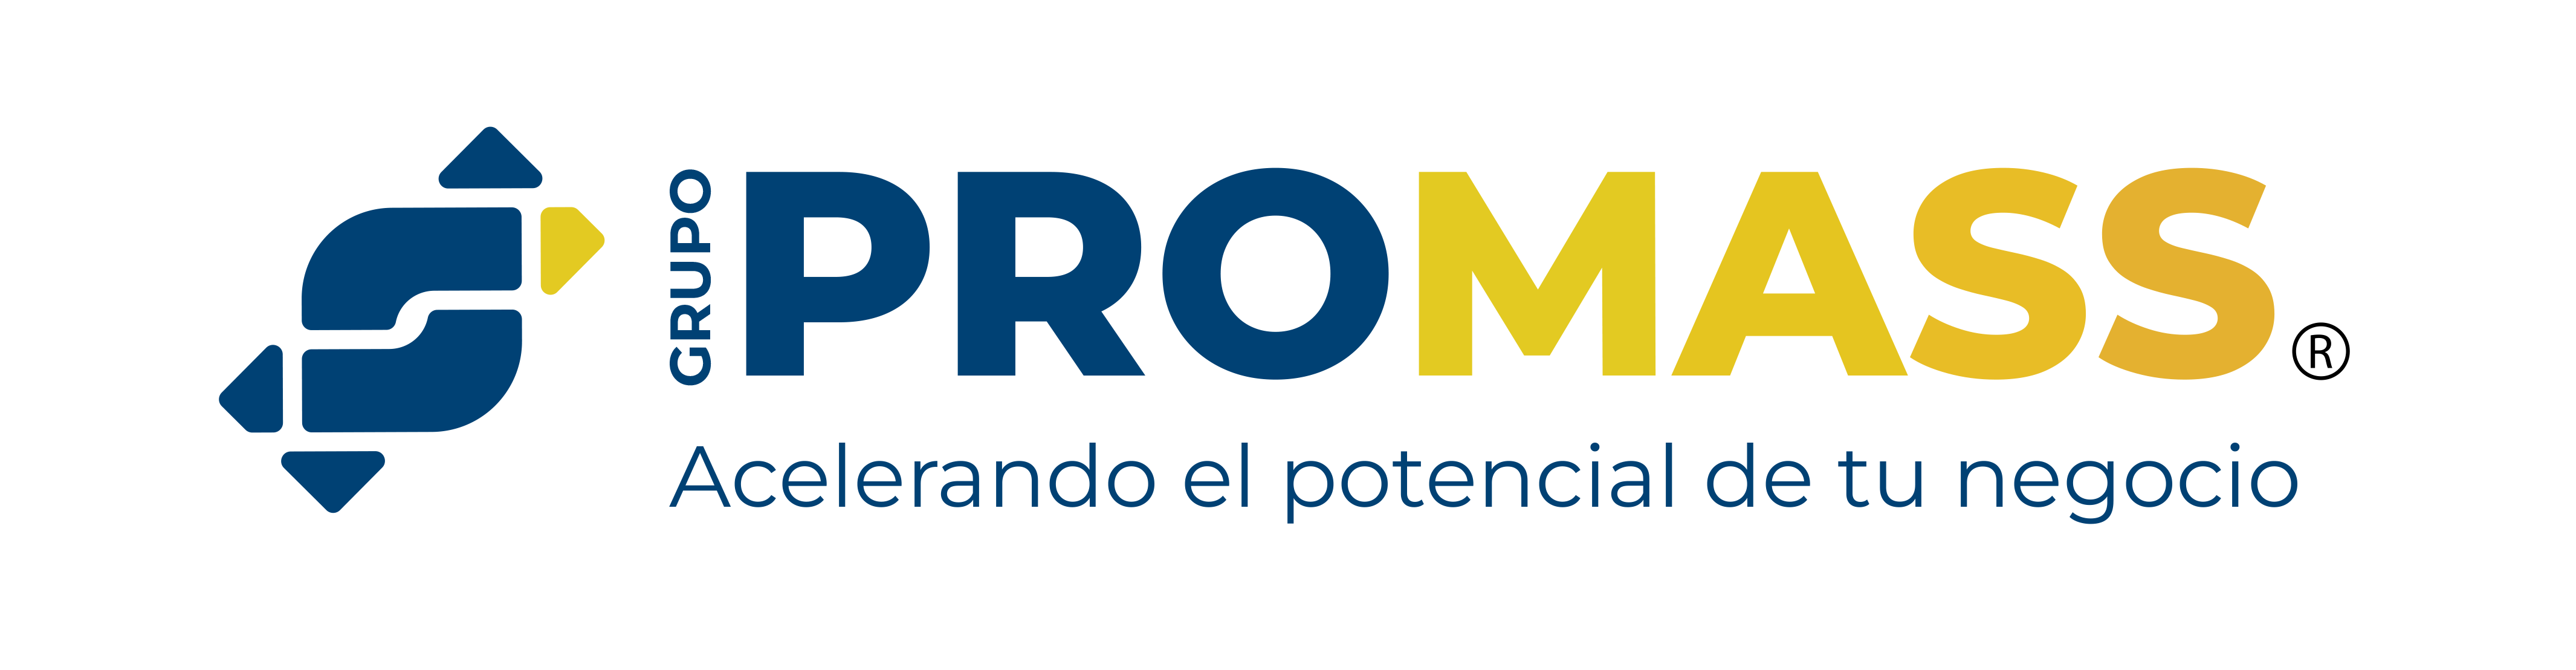 Nuevo_Logo_PROMASS